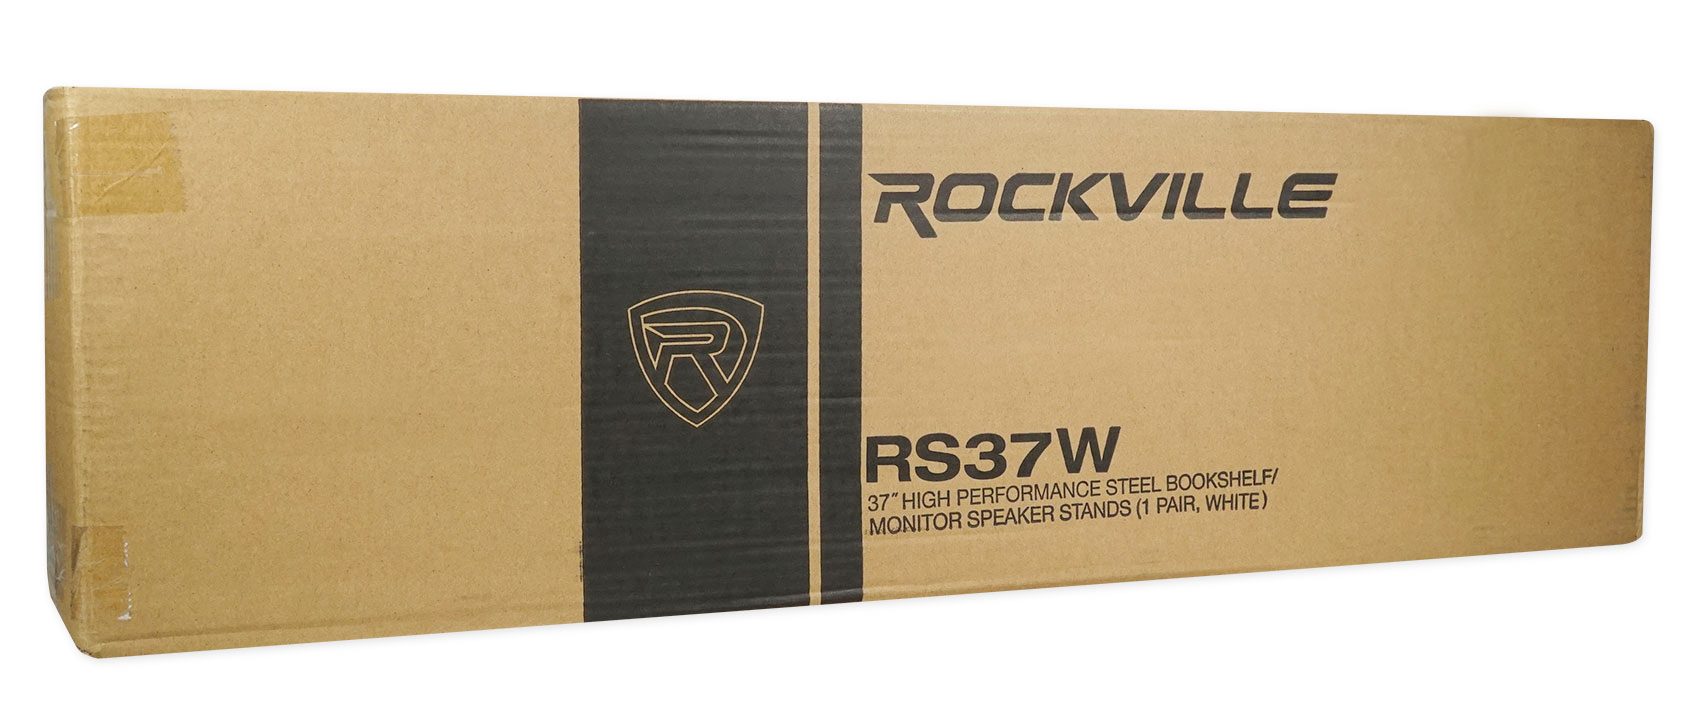 Rockville ELITE-5W 5.25" Powered White Bookshelf Speakers w/Bluetooth+37" Stands - image 3 of 21